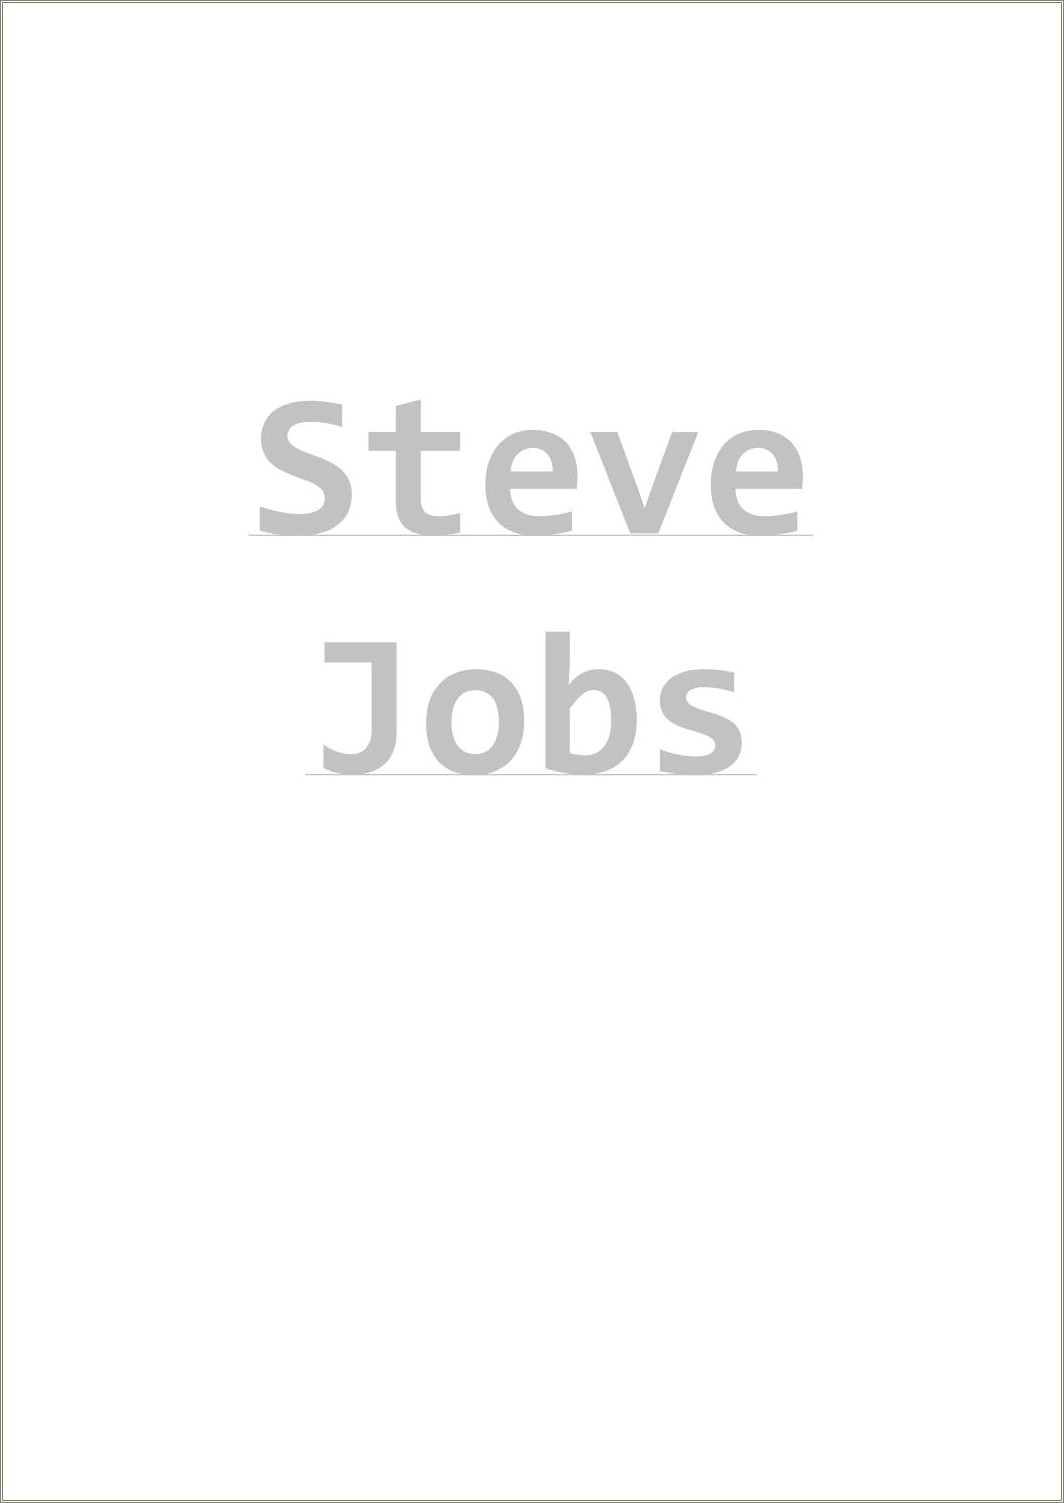 Resumen De La Pelicula De Steve Jobs Yahoo